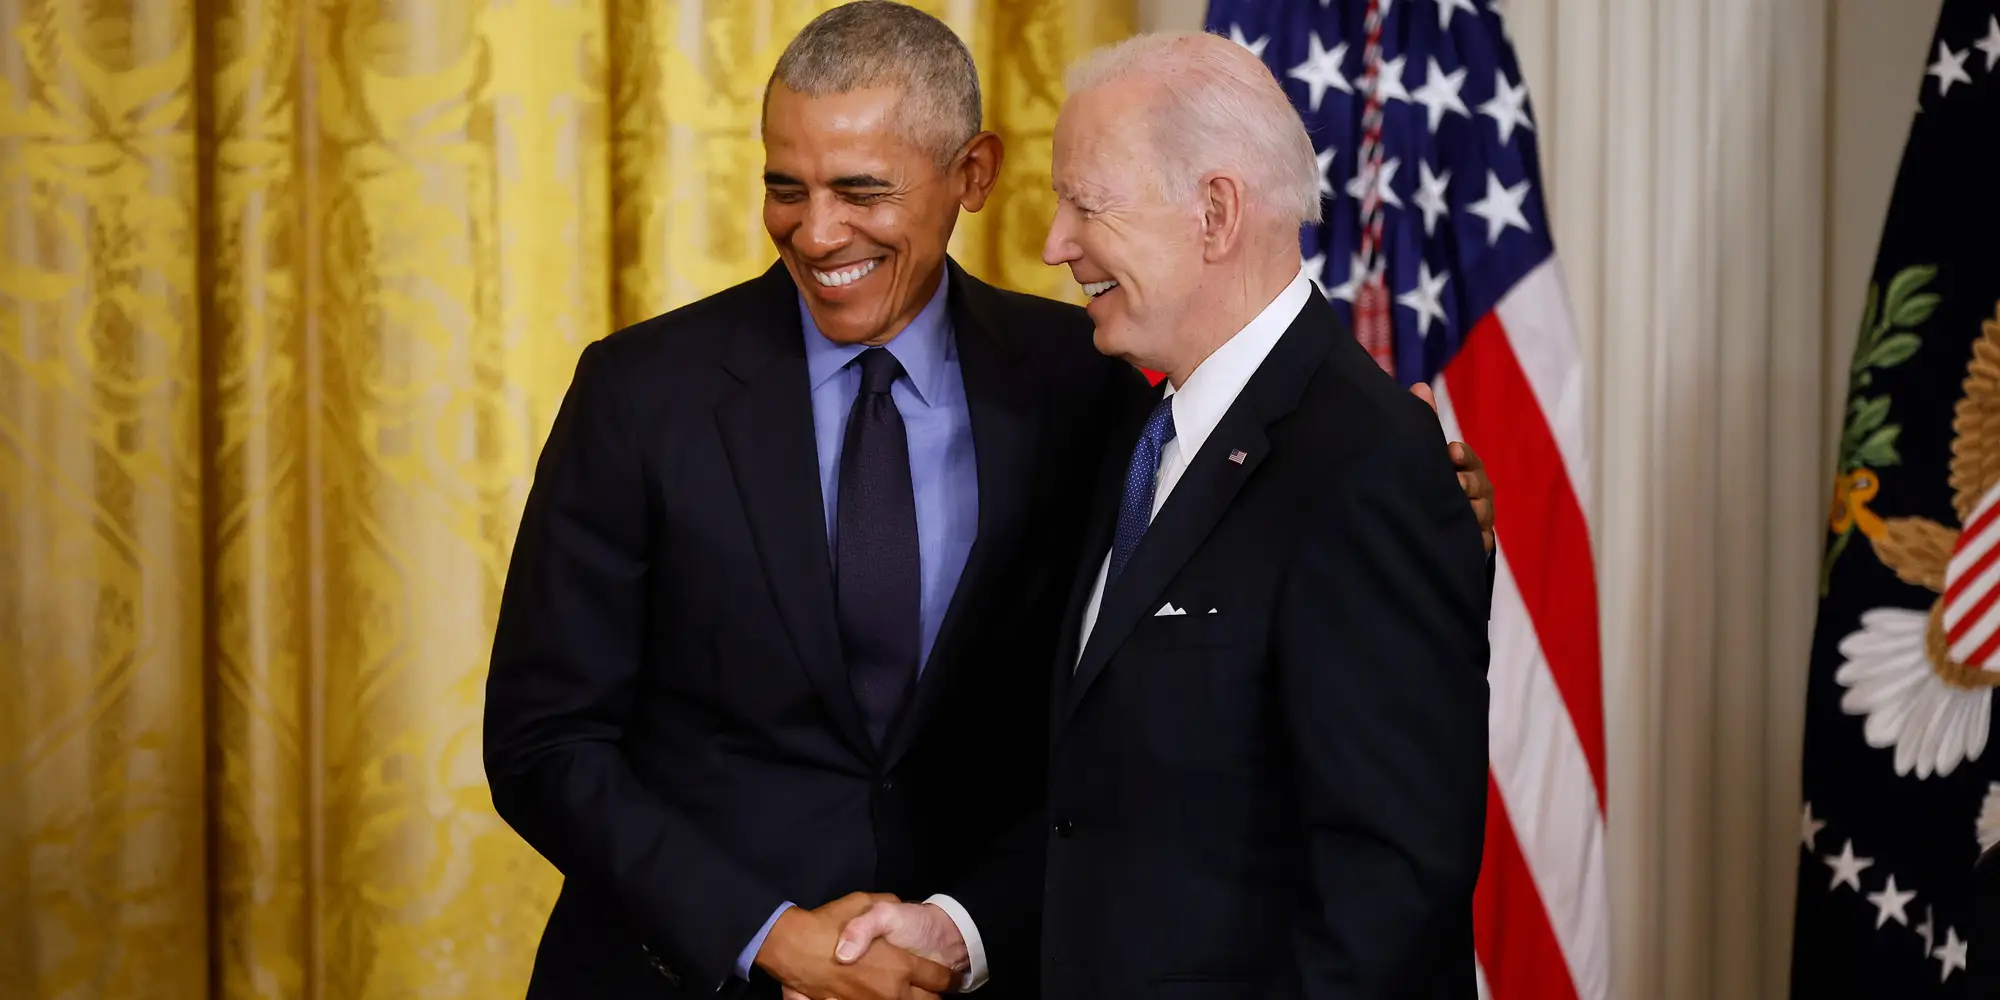 Biden is Obama’s “Useful Idiot.” IABO- “It’s Always Been Obama”